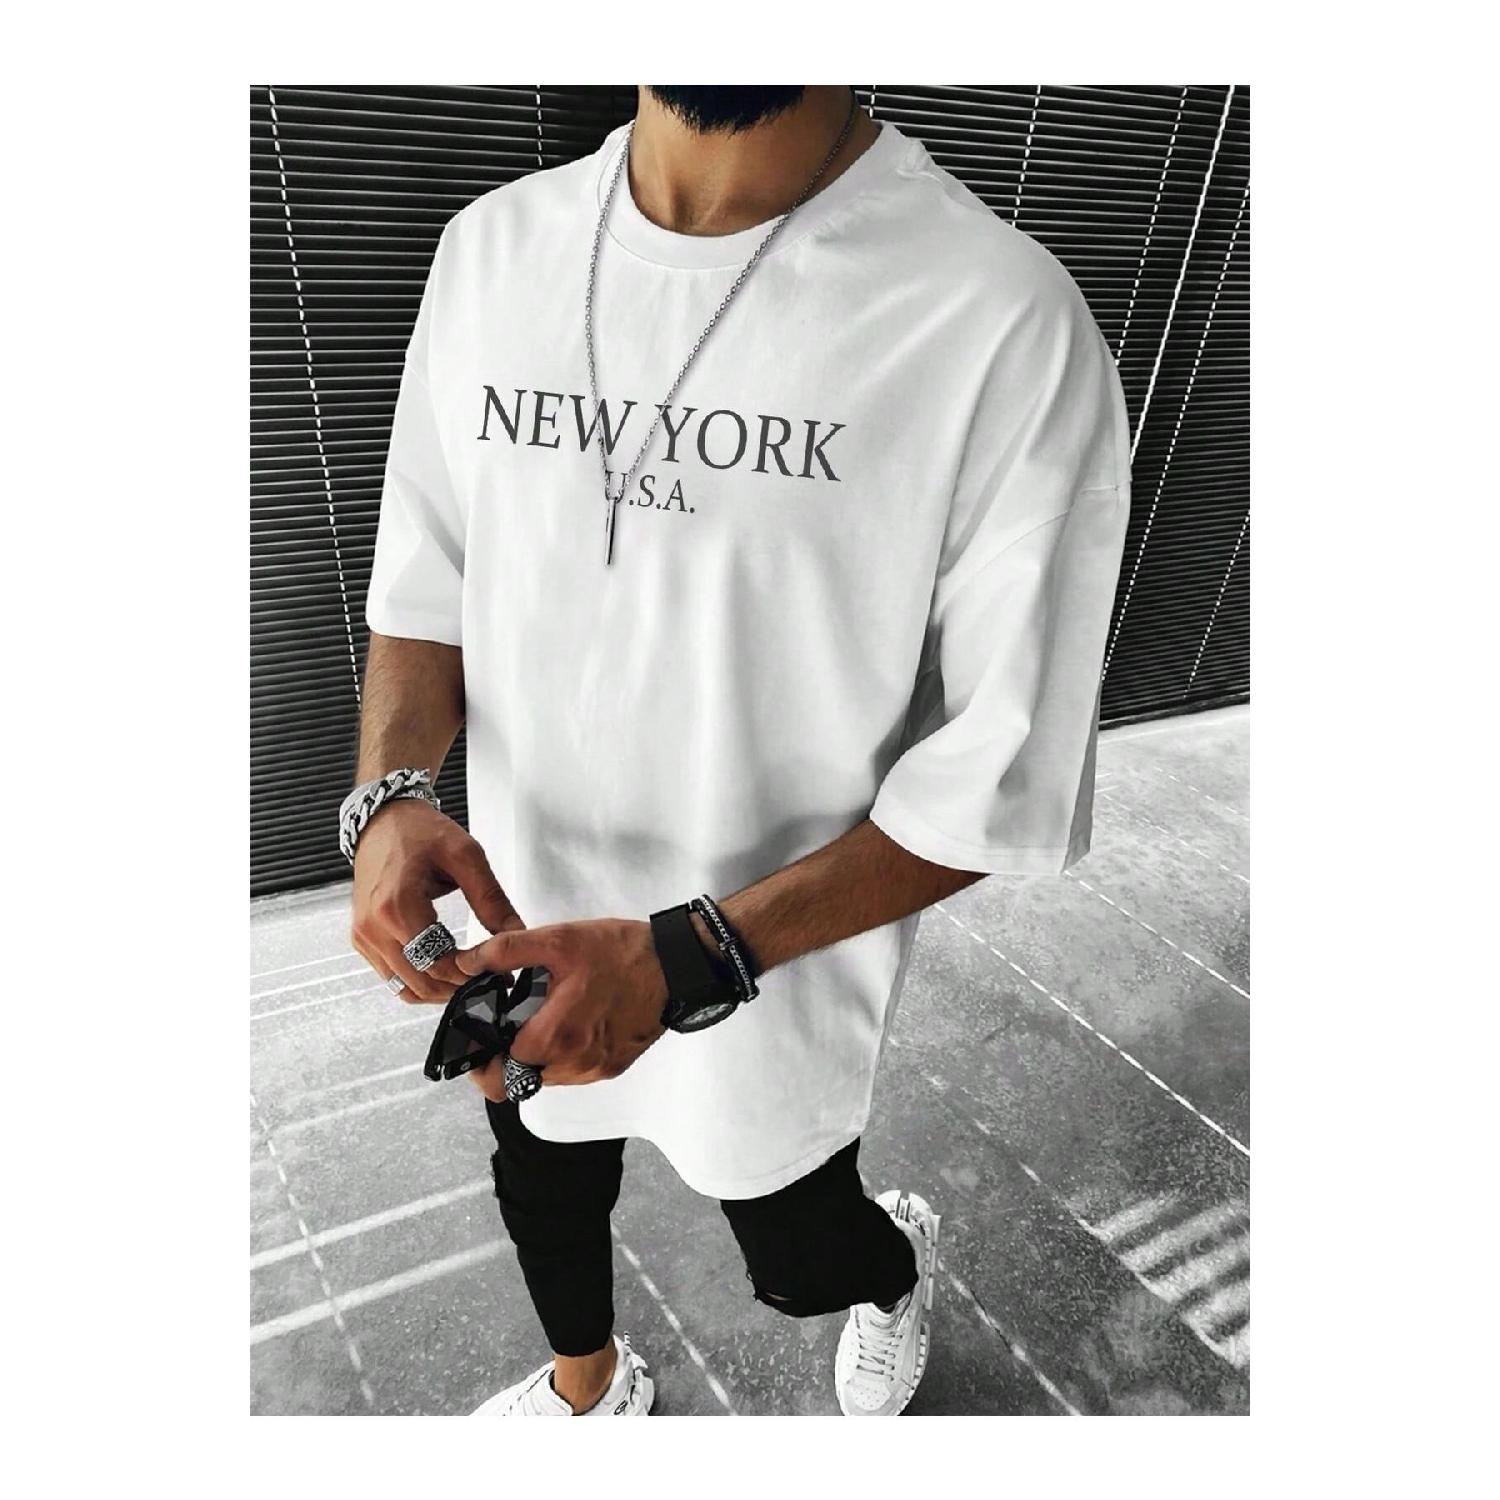 Santra Sports Wear New York Printed Oversized Unisex T-shirt